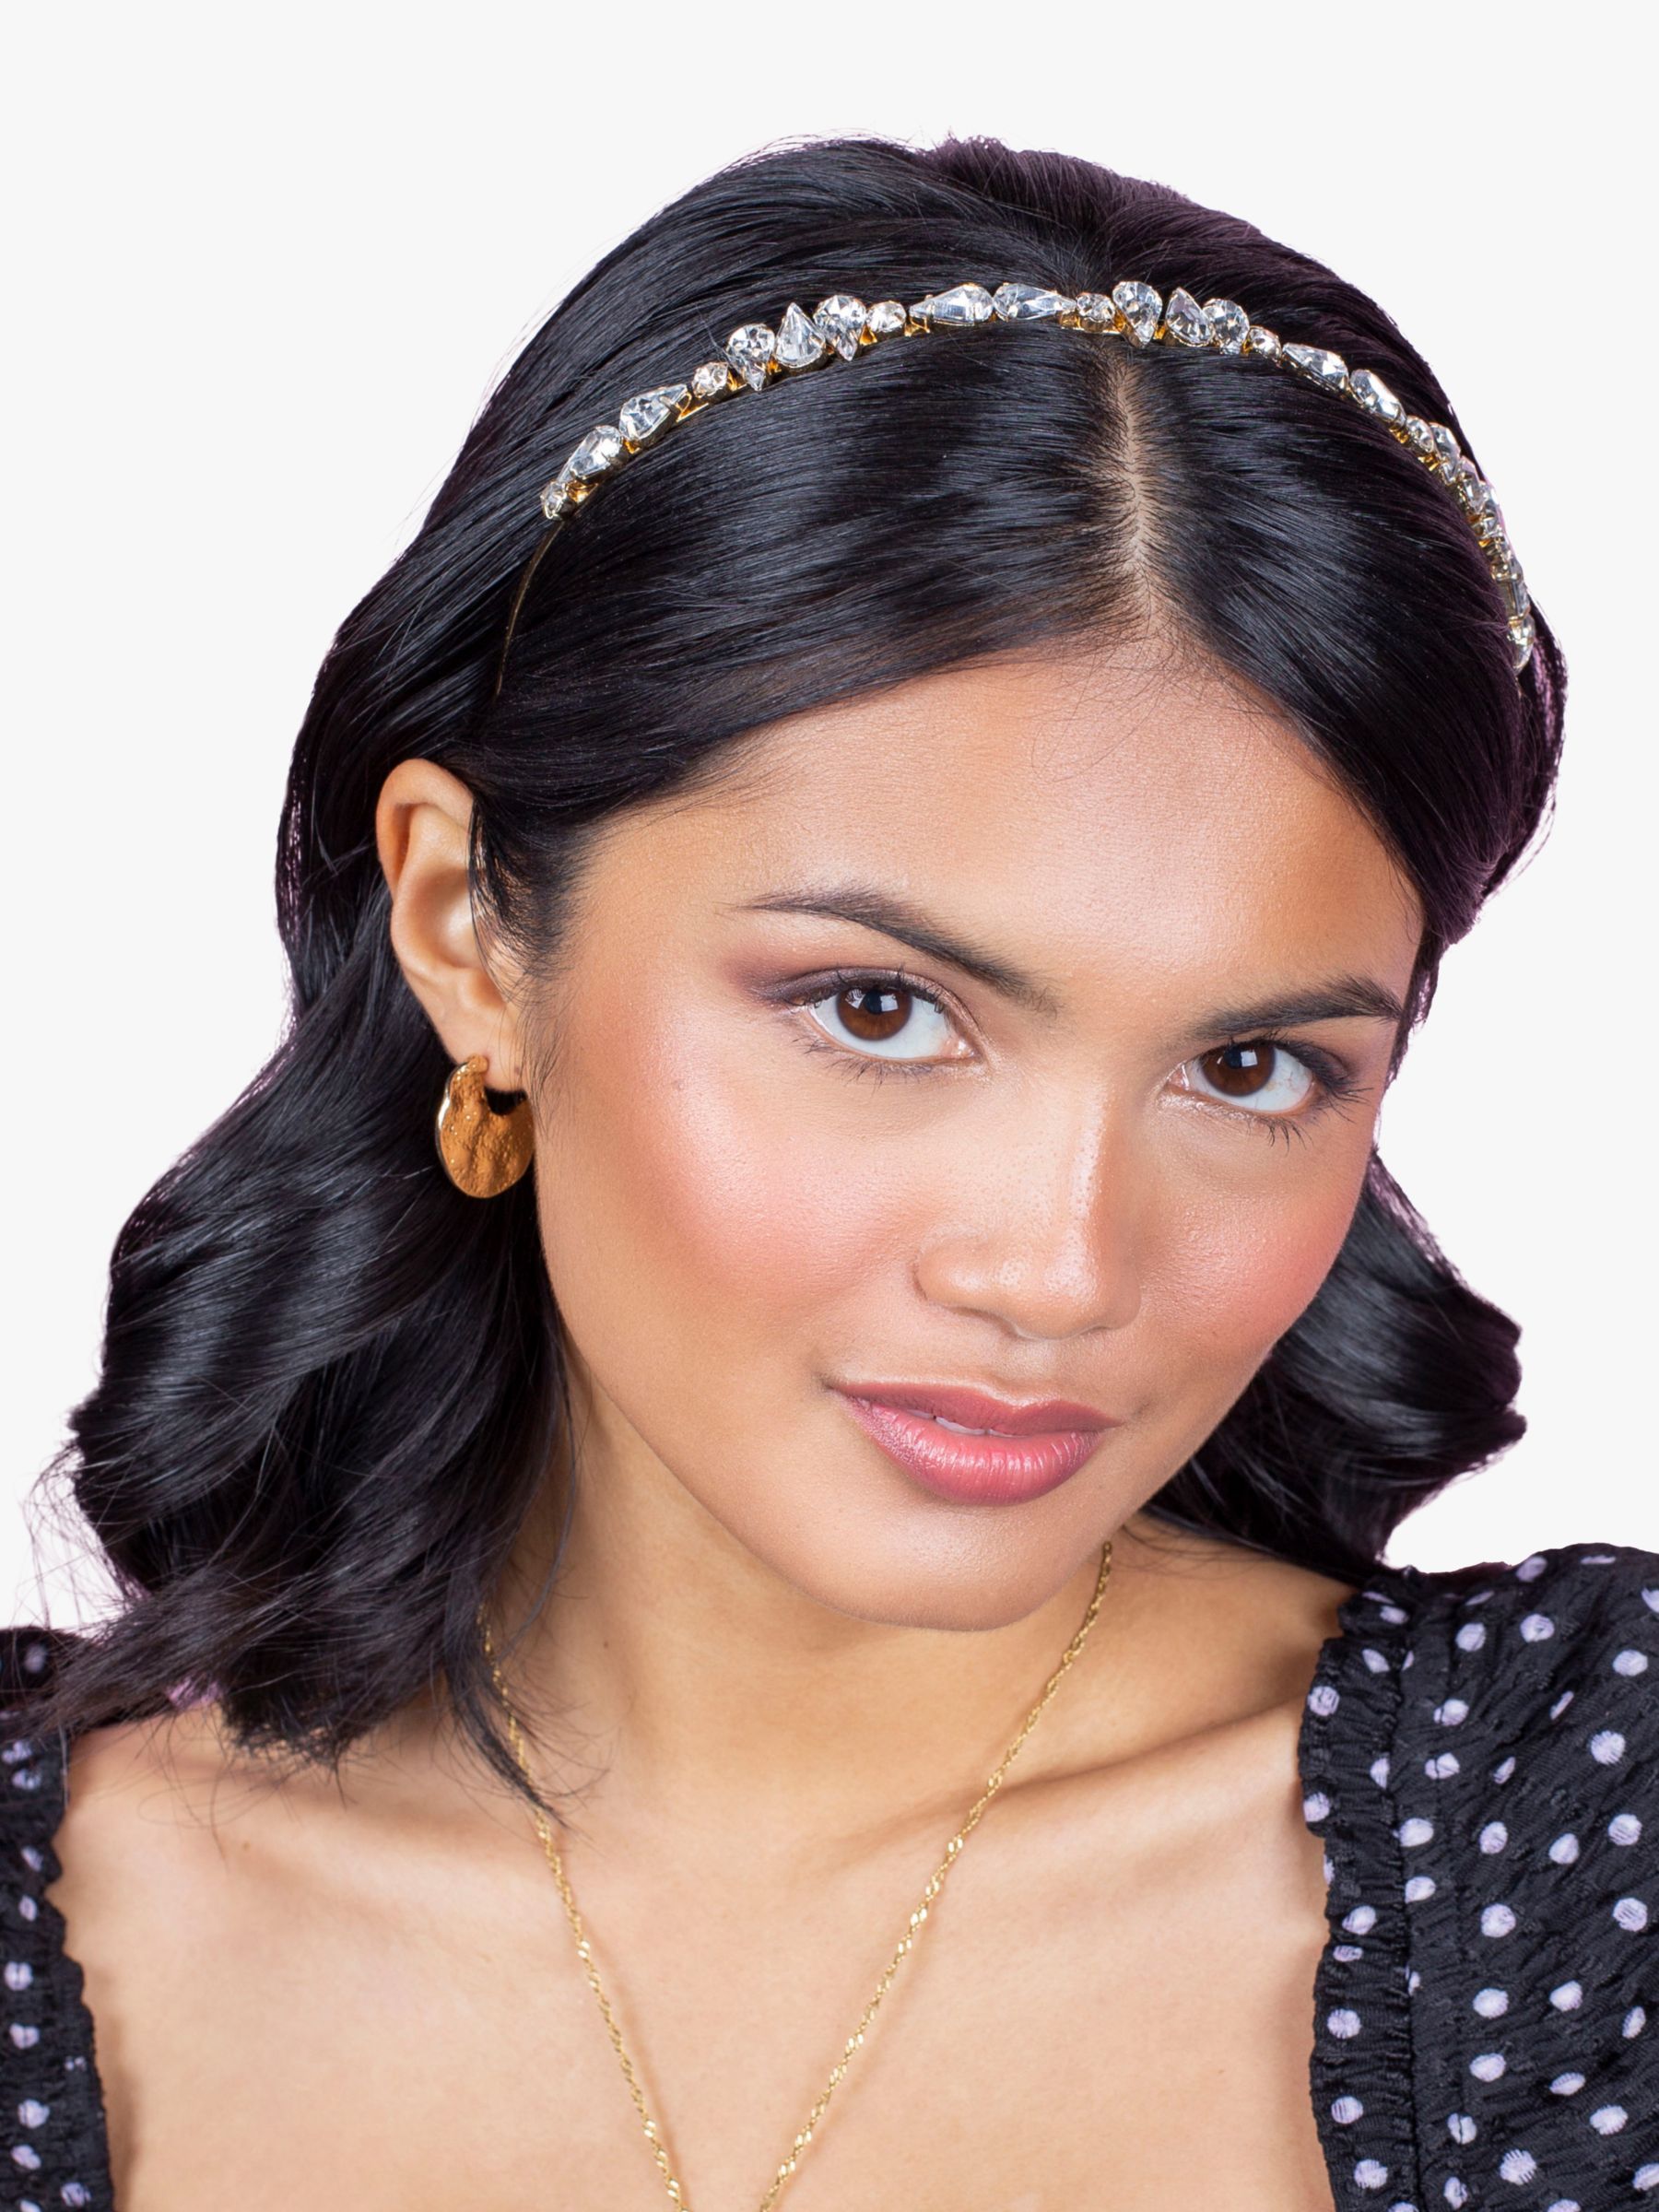 Bloom & Bay Snowdrop Crystal Headband, Gold, One Size